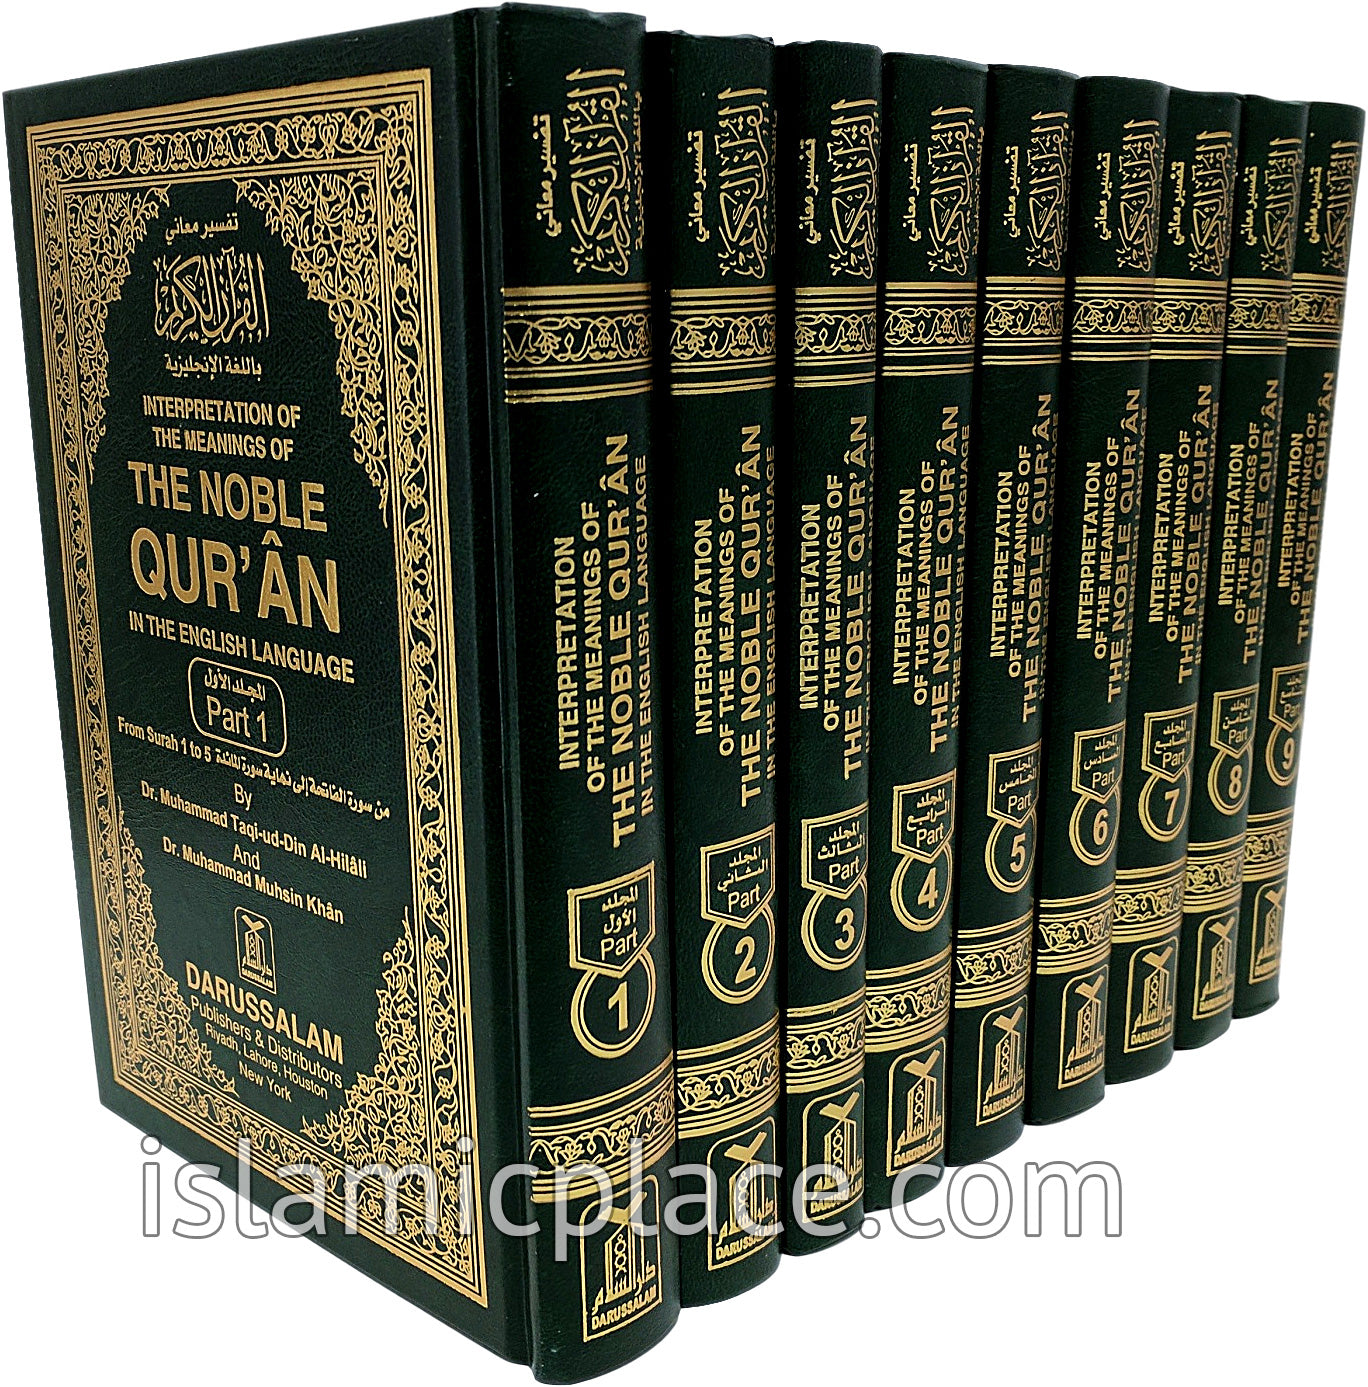 [9 vol set] Noble Quran set with comments from Tafsir At-Tabari, Tafsir Al-Qurtubi and Tafsir Ibn Kathir and Ahadith